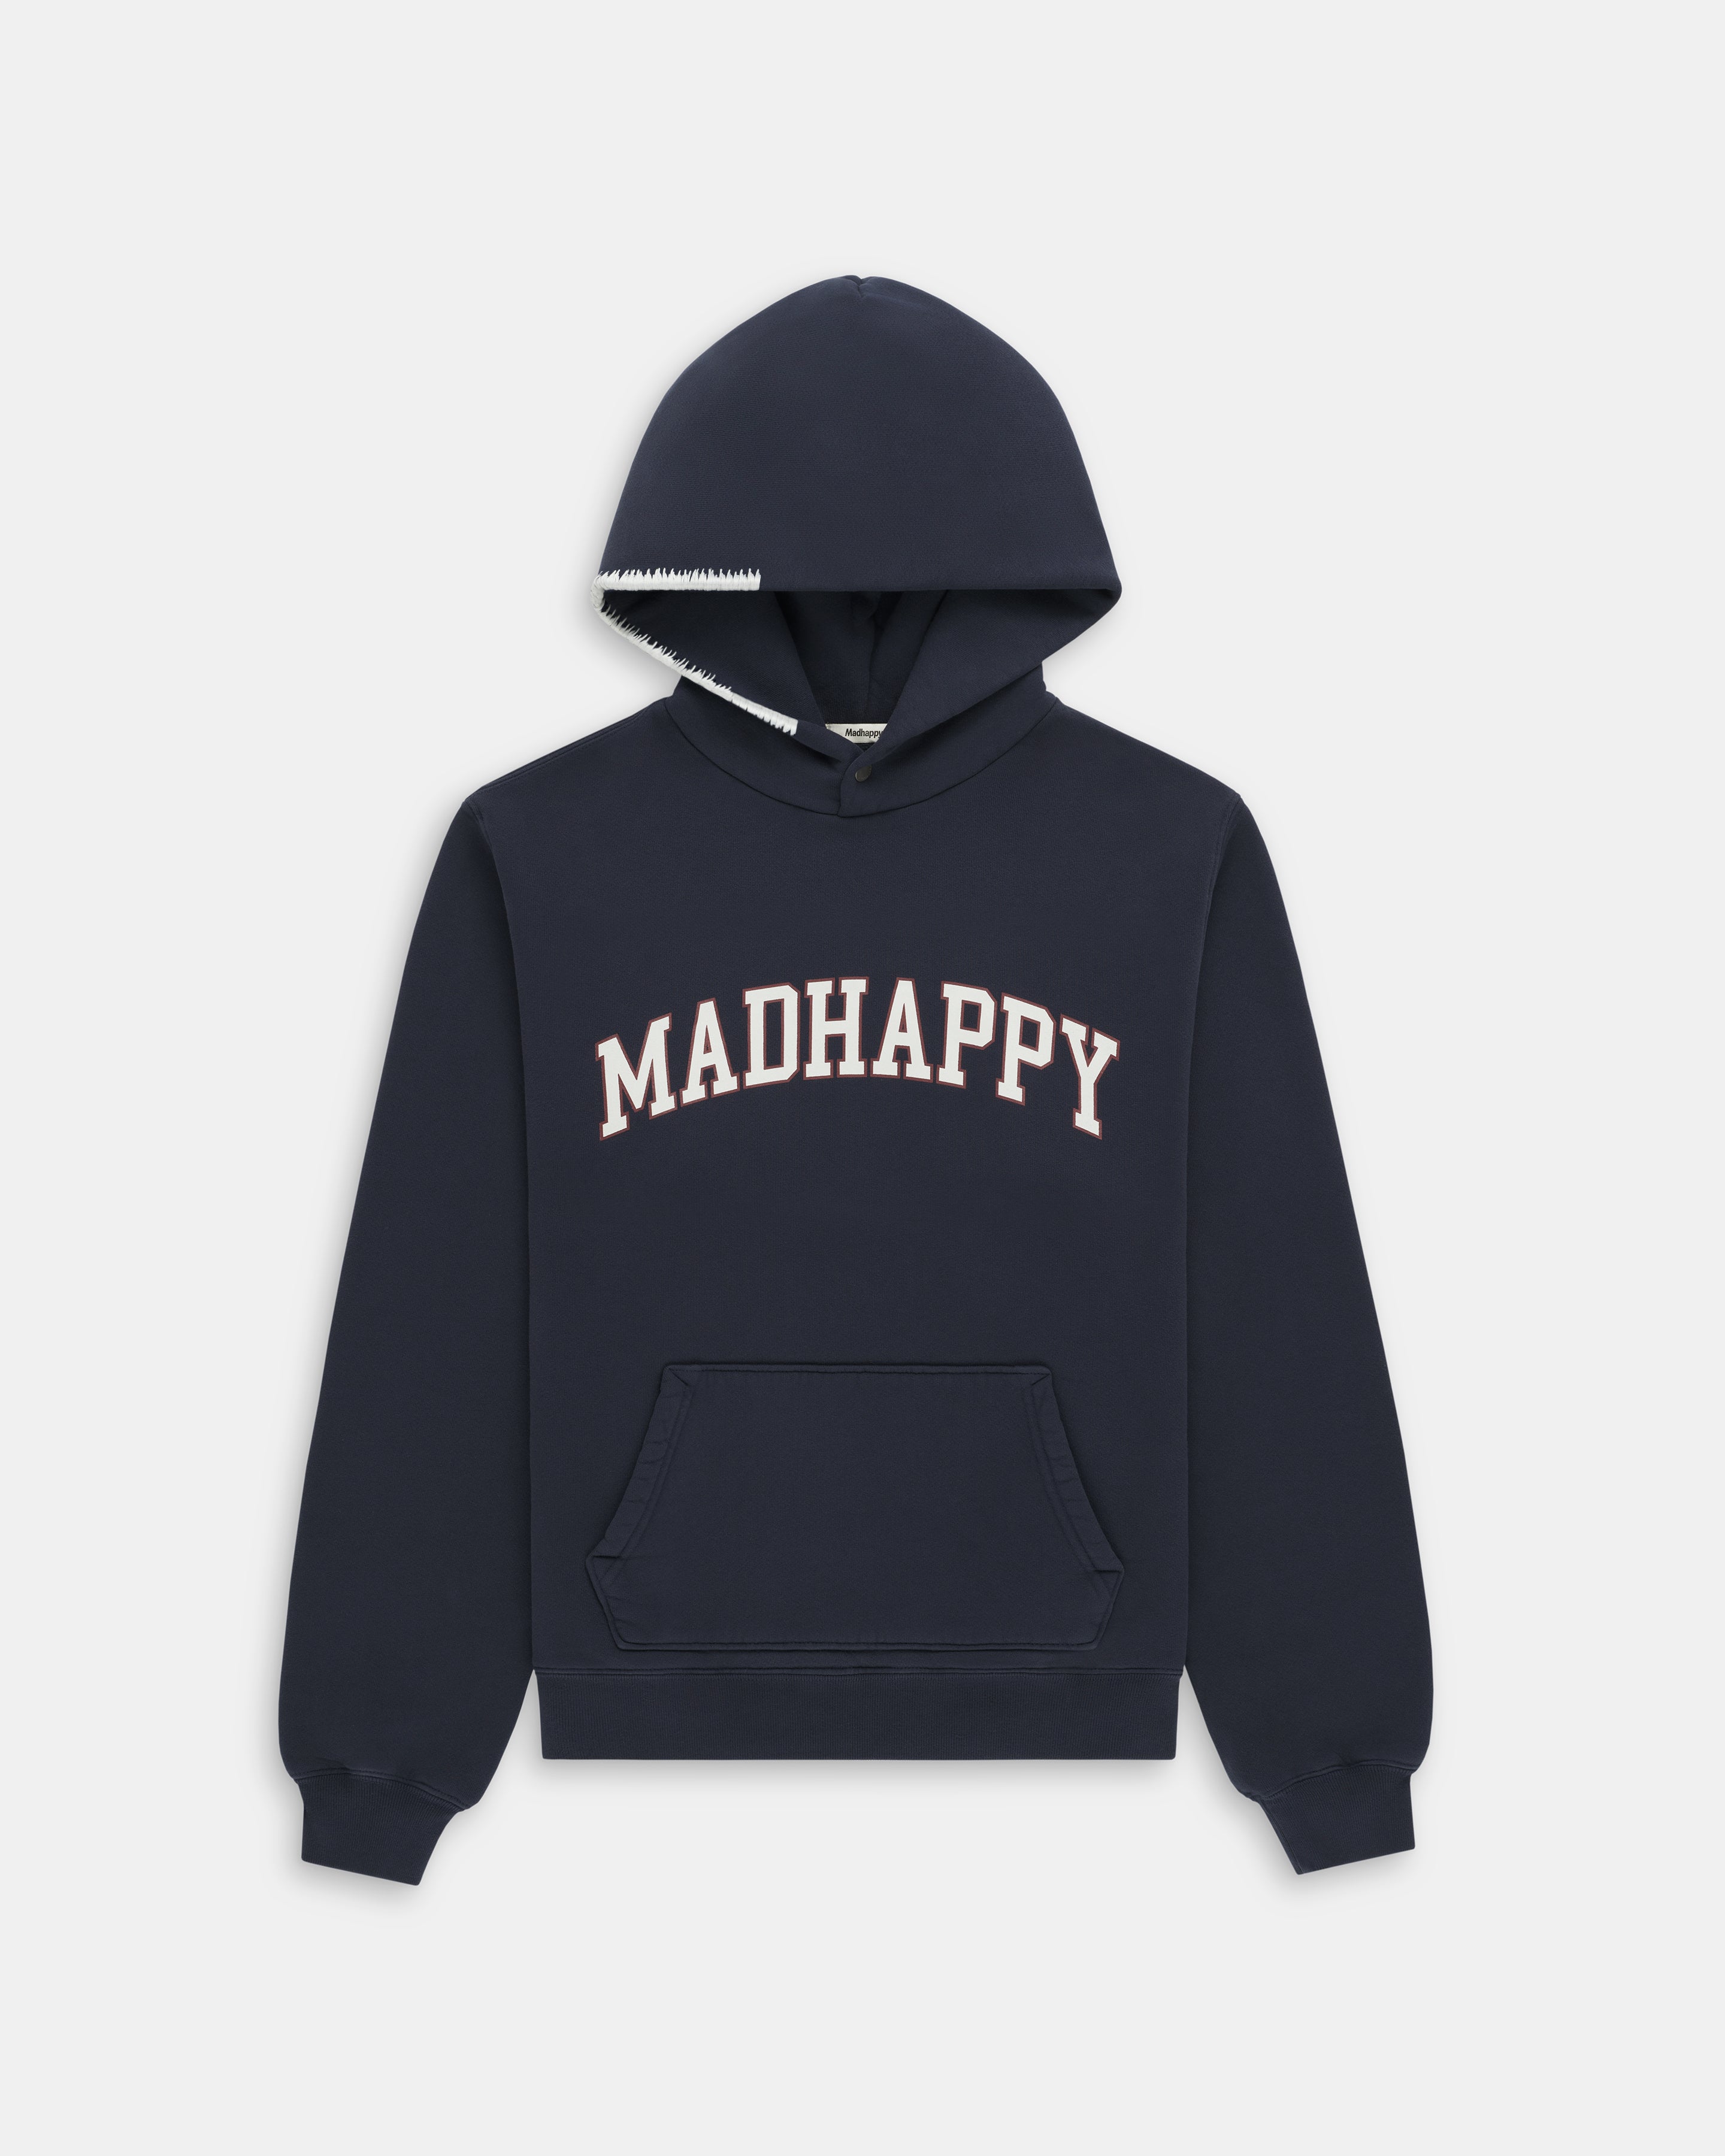 madhappy